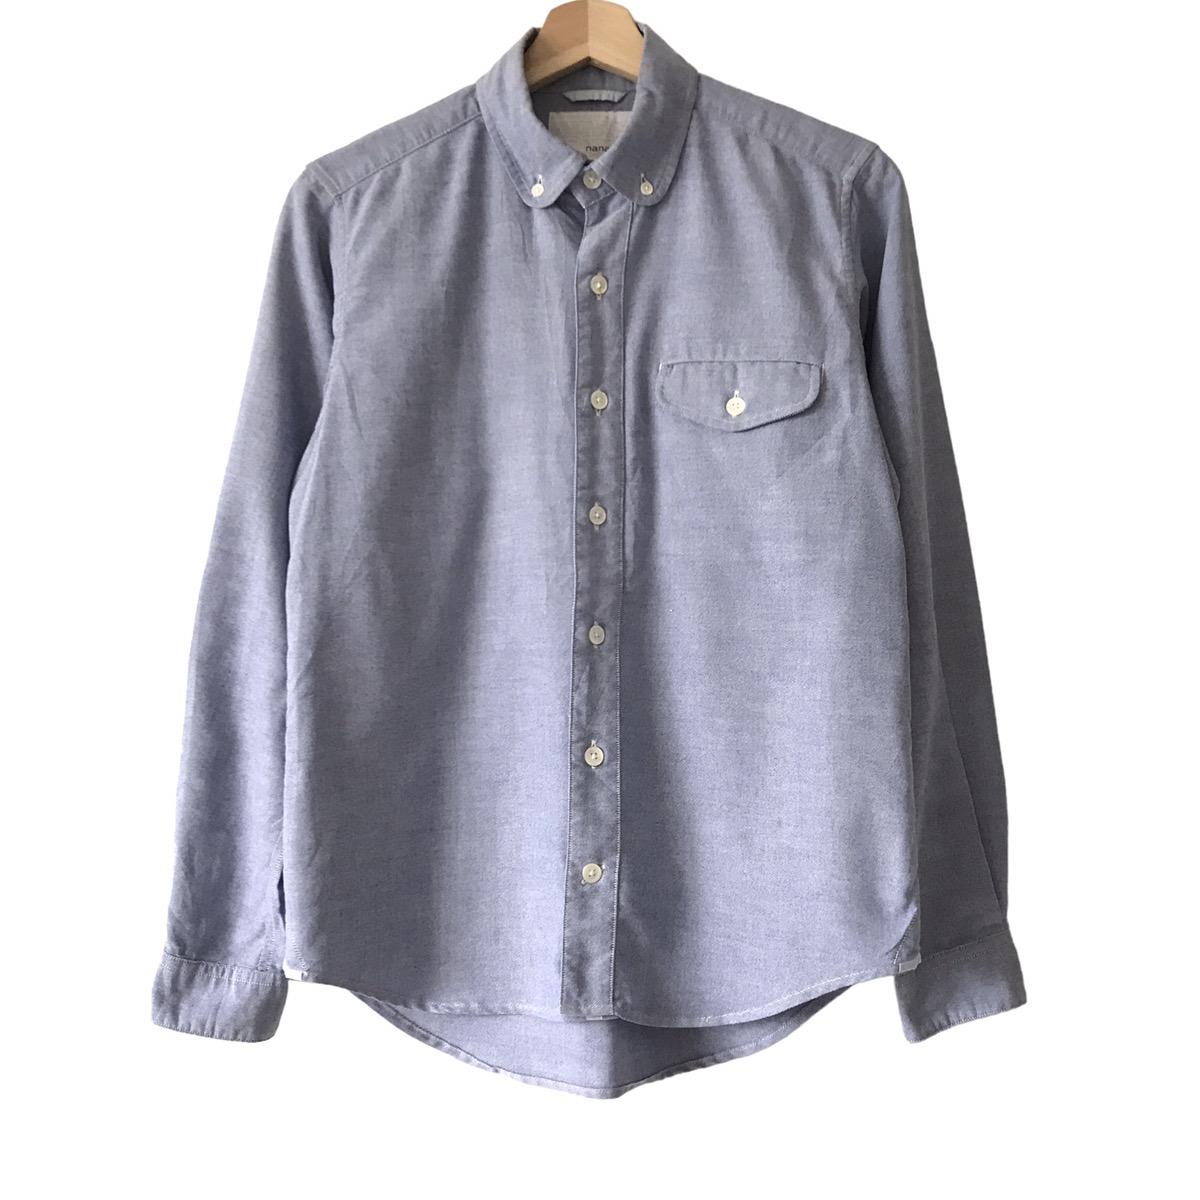 Nanamica Japan Cotton Blend Casual Shirt - 1